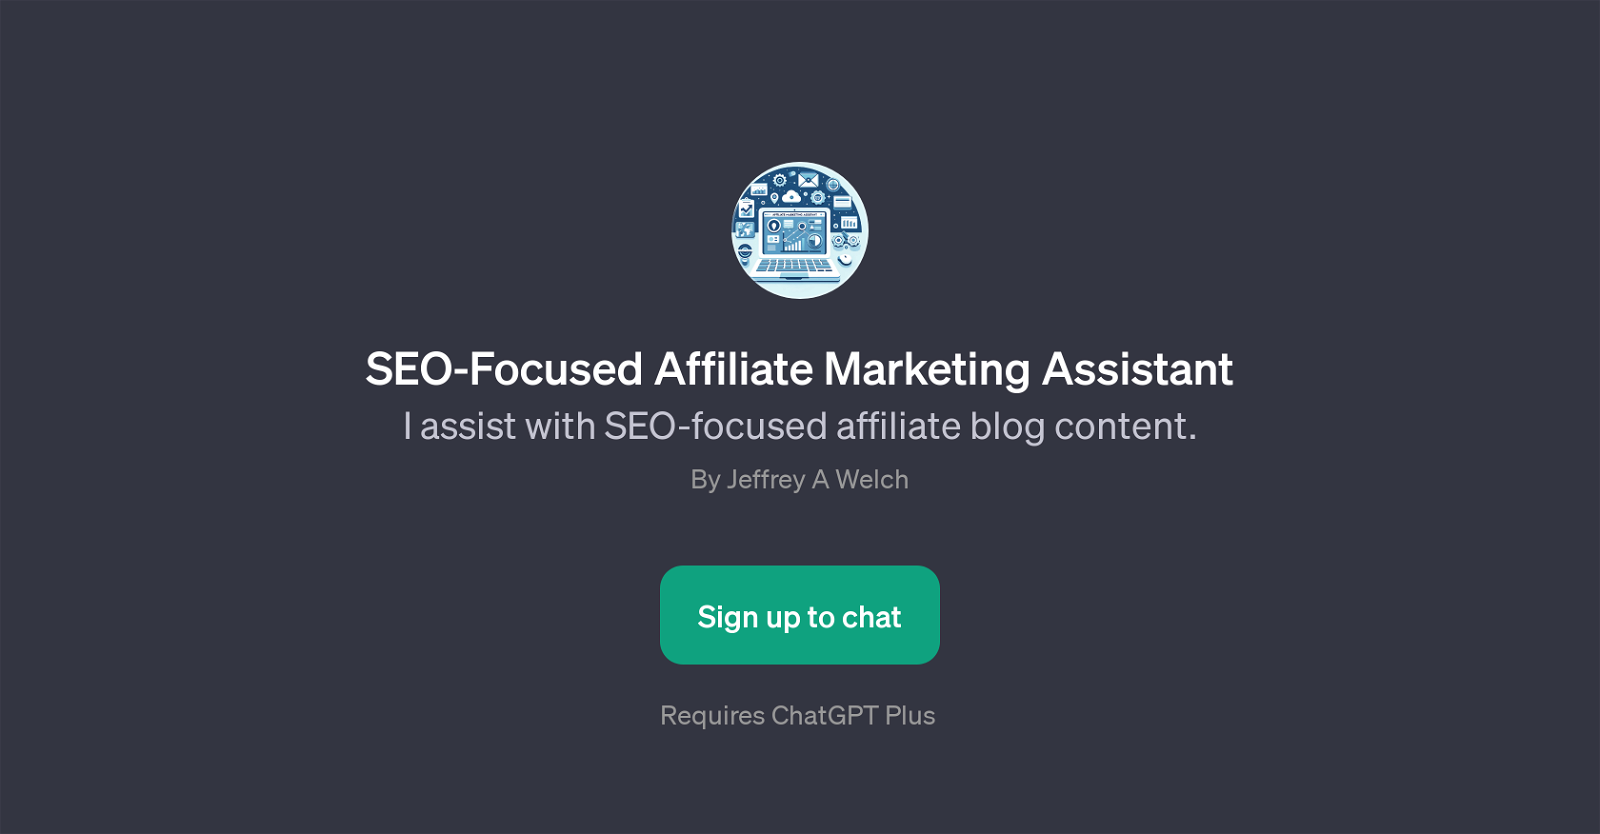 SEO-Focused Affiliate Marketing Assistant website